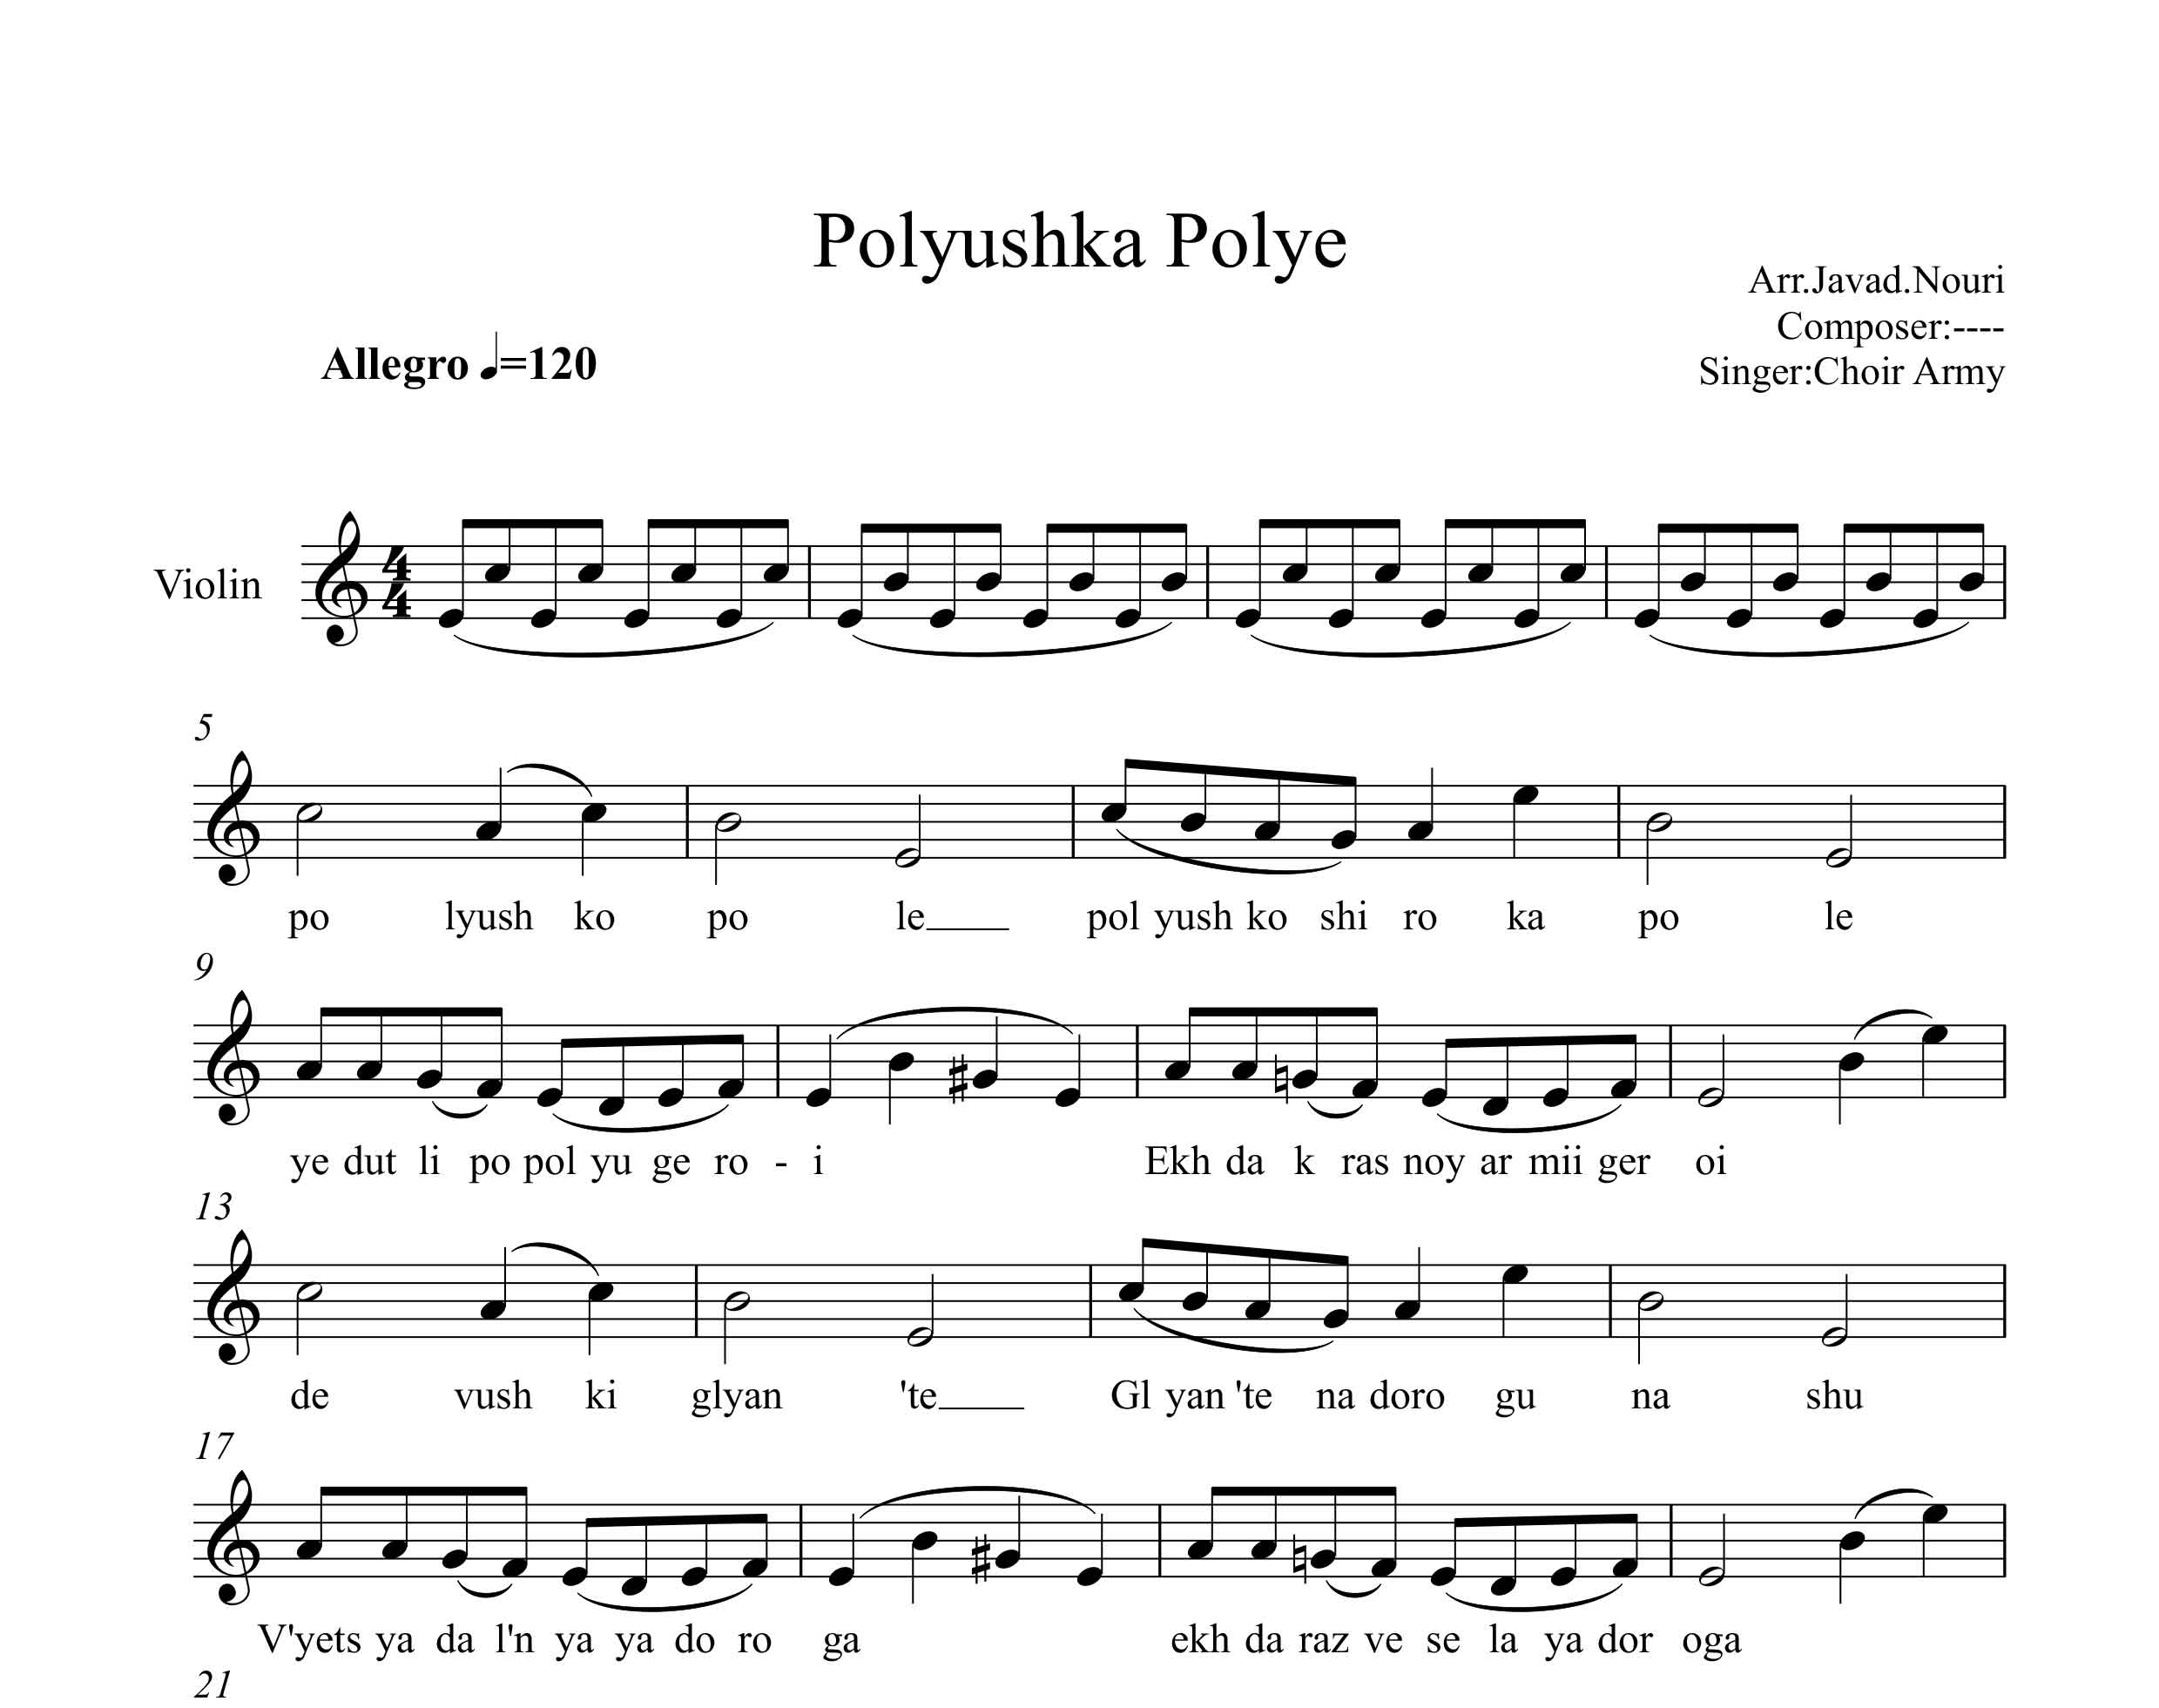 نت ویولن lay lay lay la lay or Polyushko Polye